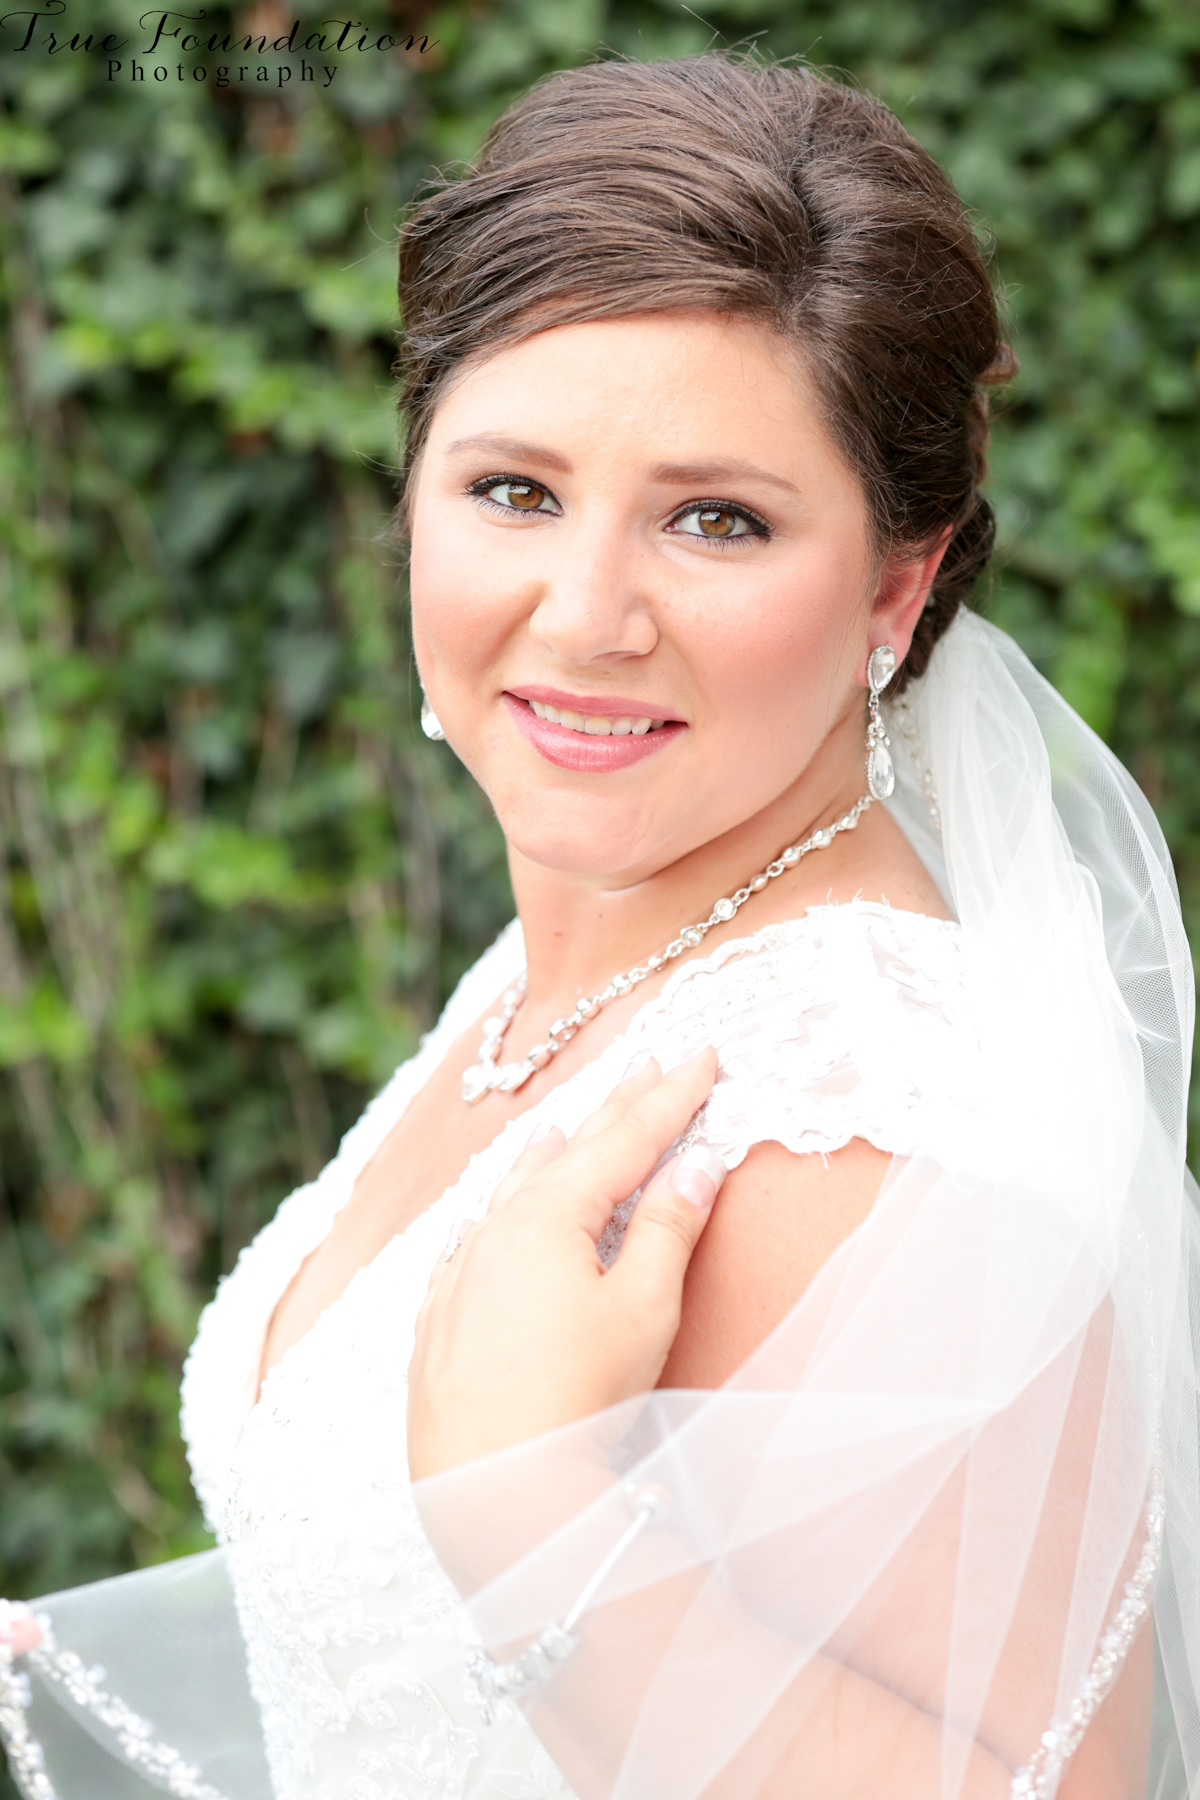 Bridal - Portrait - Photography - Photos - Hendersonville - NC - Shelby - Photographers - Farm - Country - Pinterest - Bride (36)